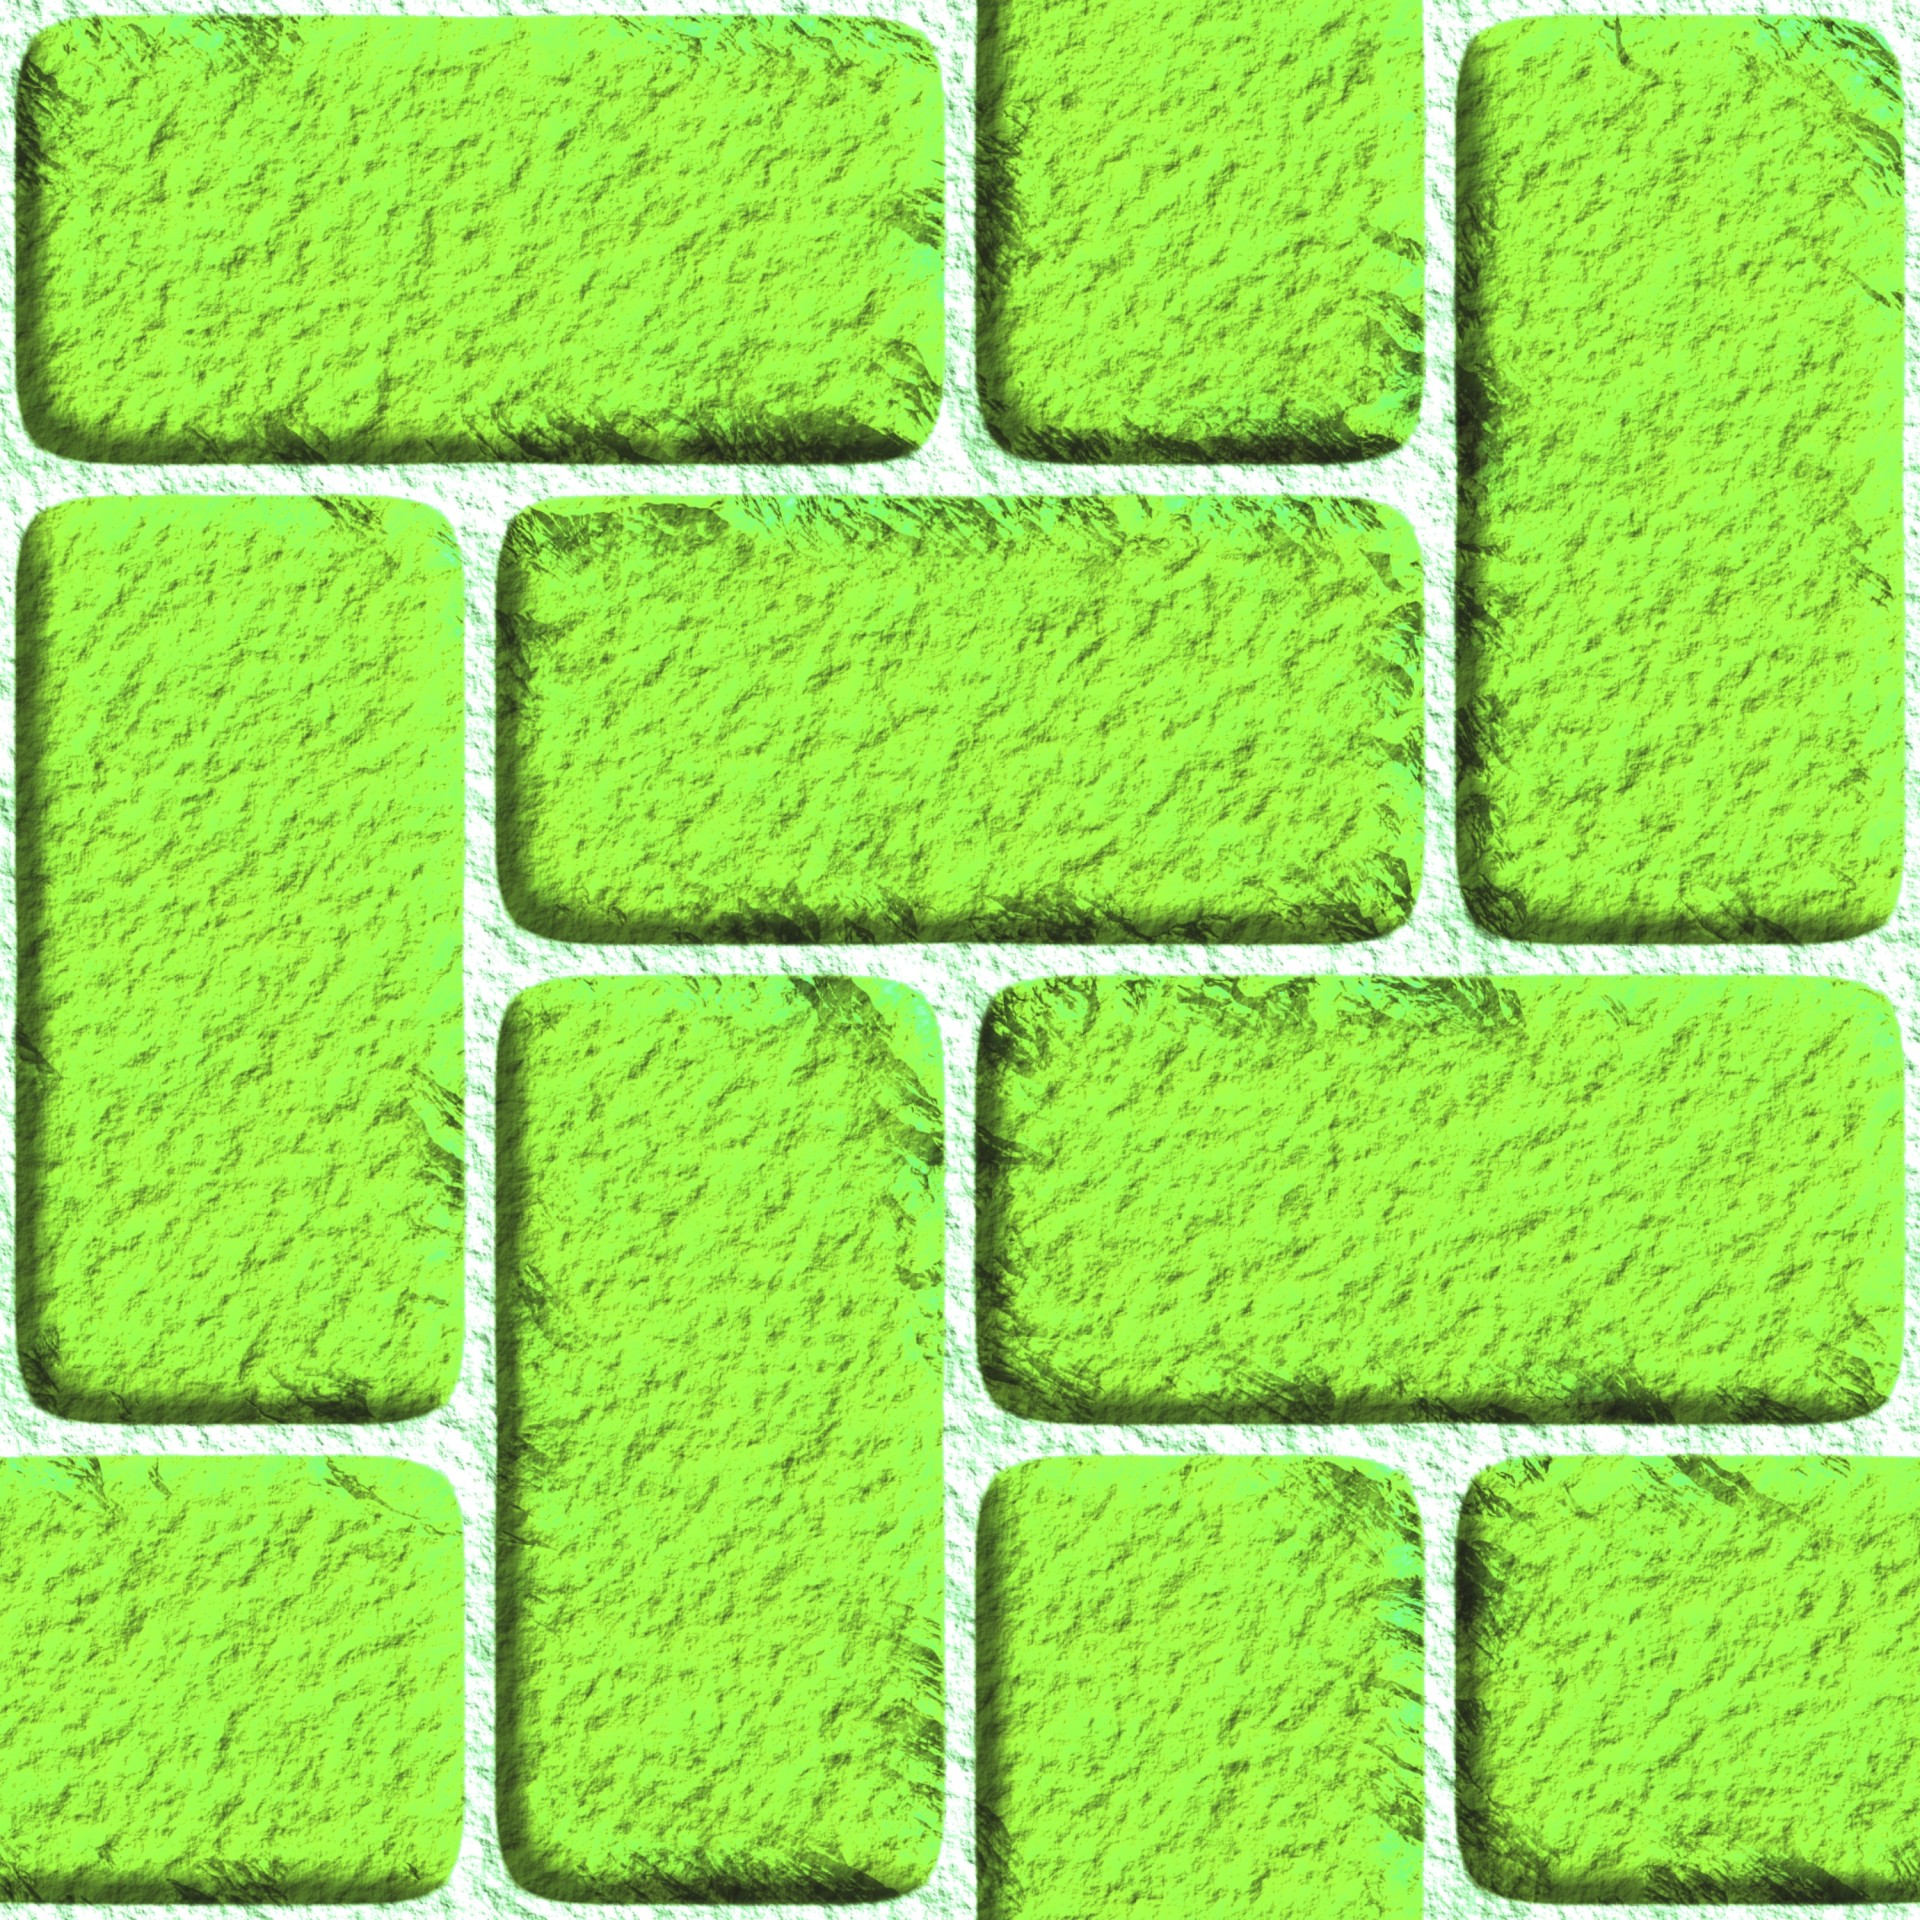 green chipped bricks free photo